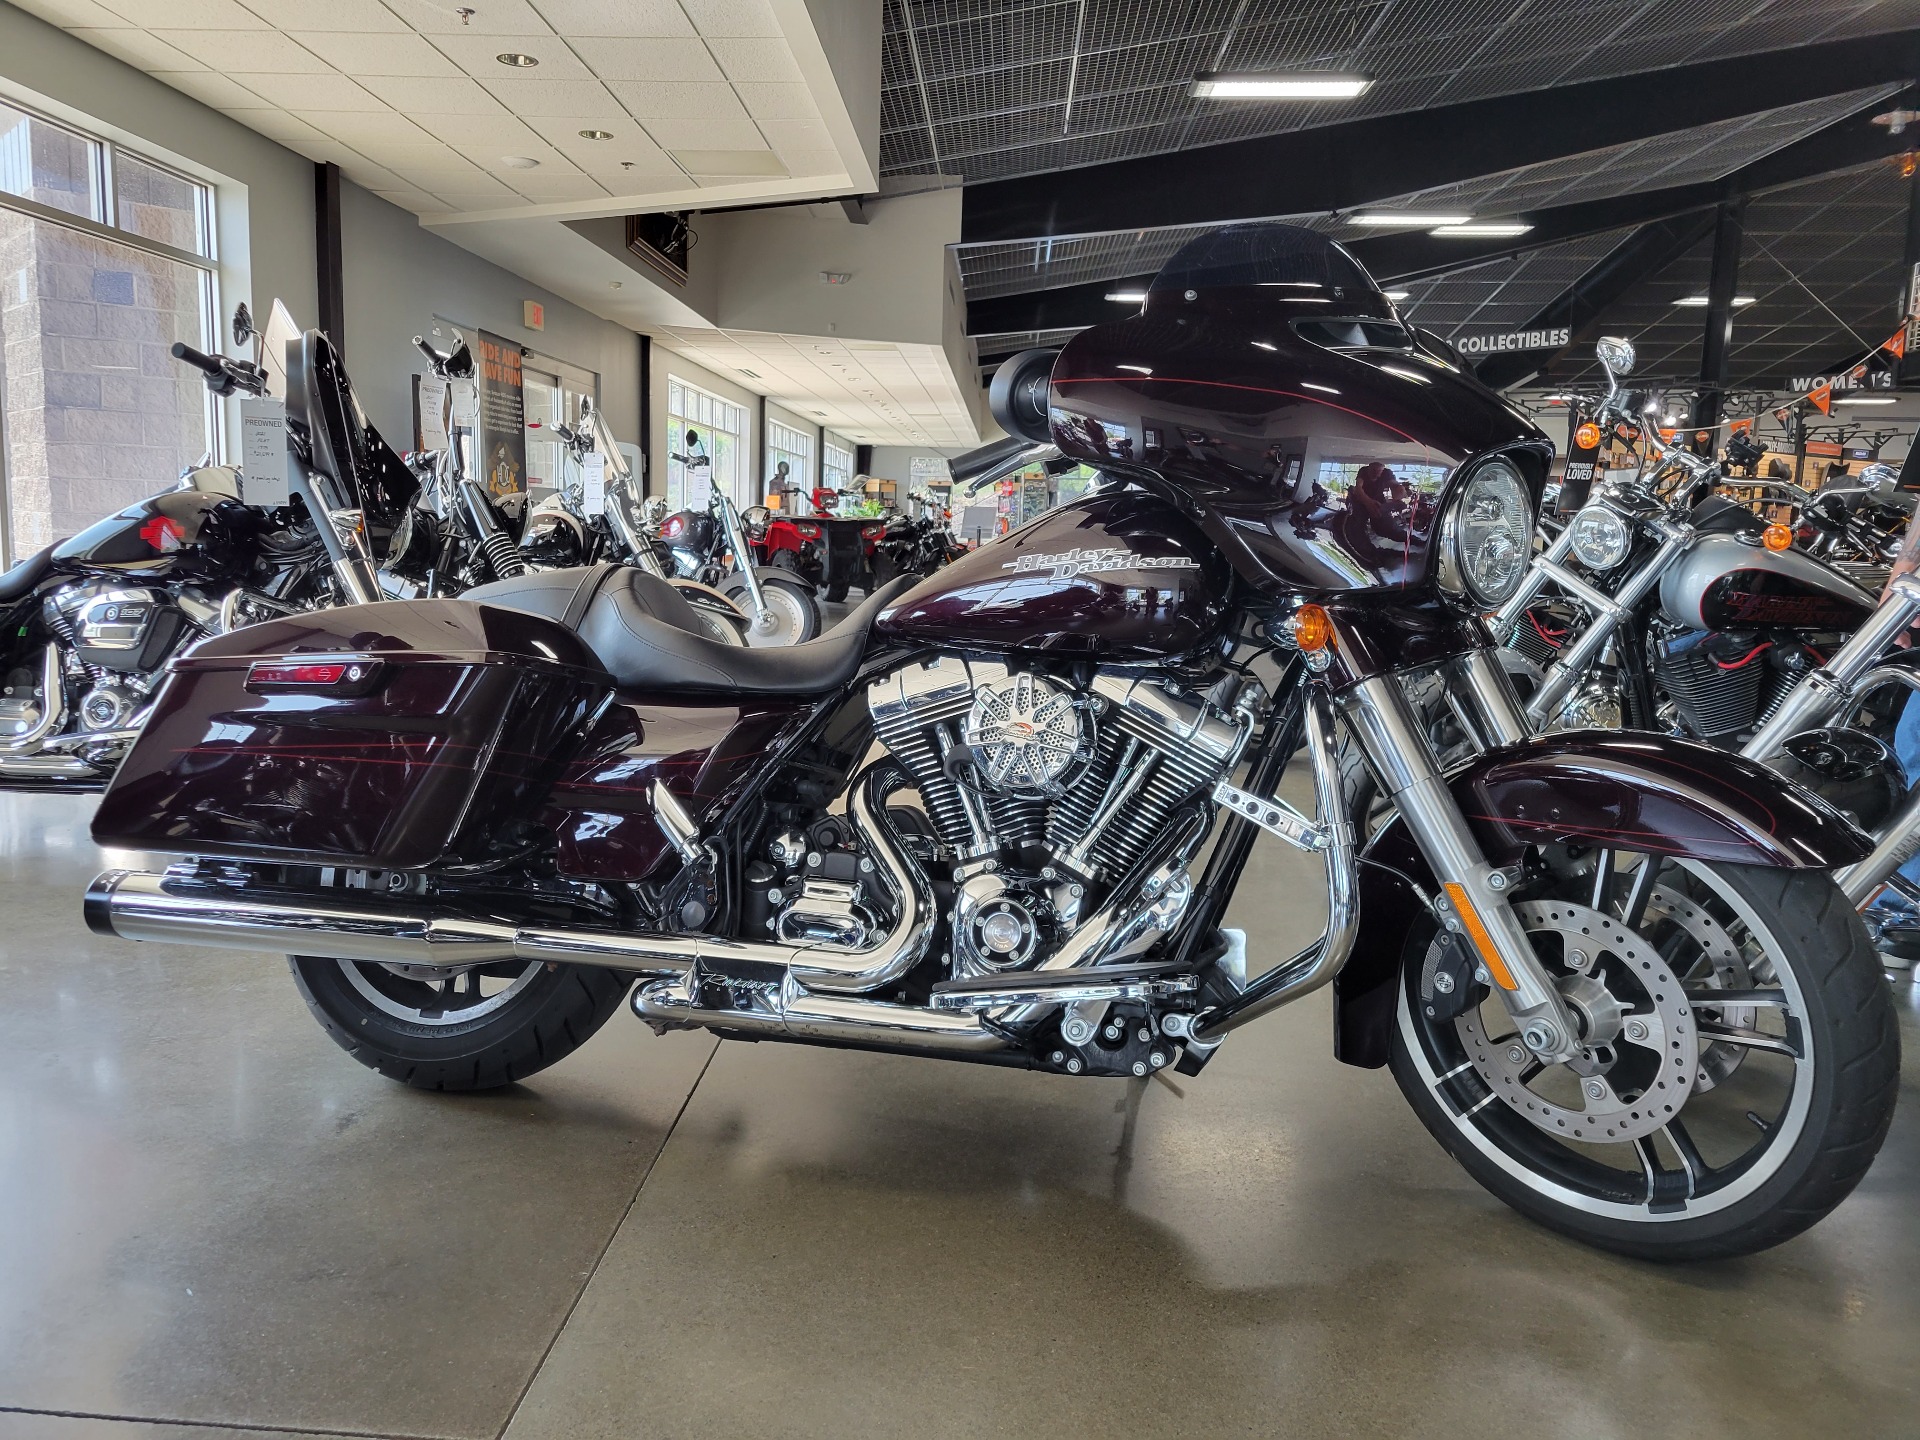 2014 Harley-Davidson Street Glide® Special in Syracuse, New York - Photo 1